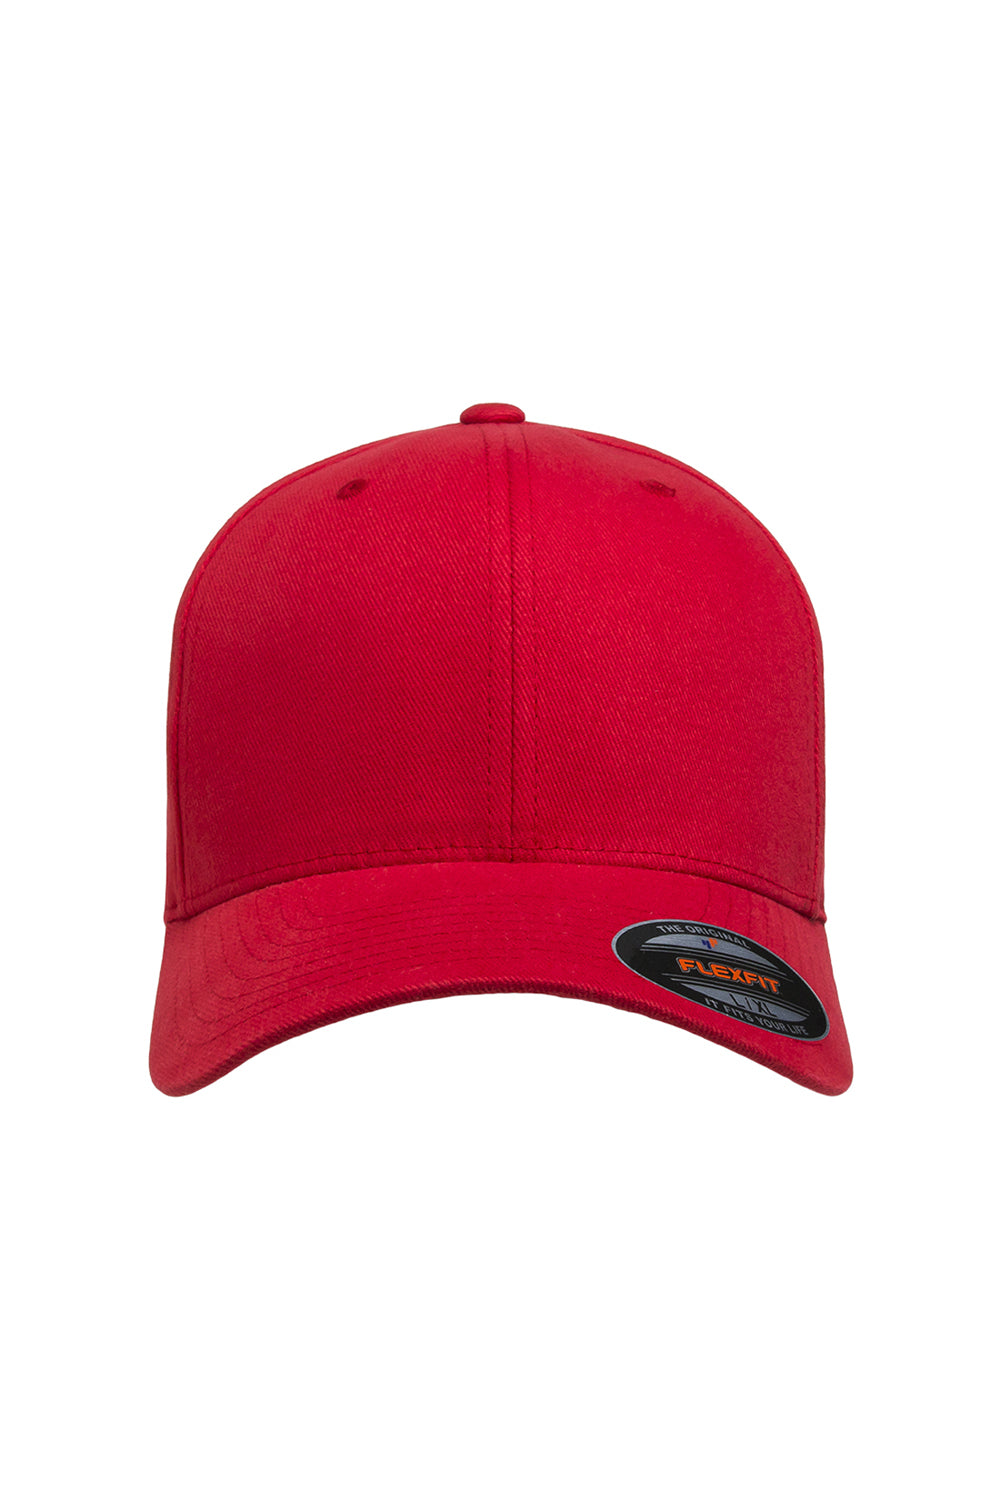 Flexfit 6377 Mens Stretch Fit Hat Red Front